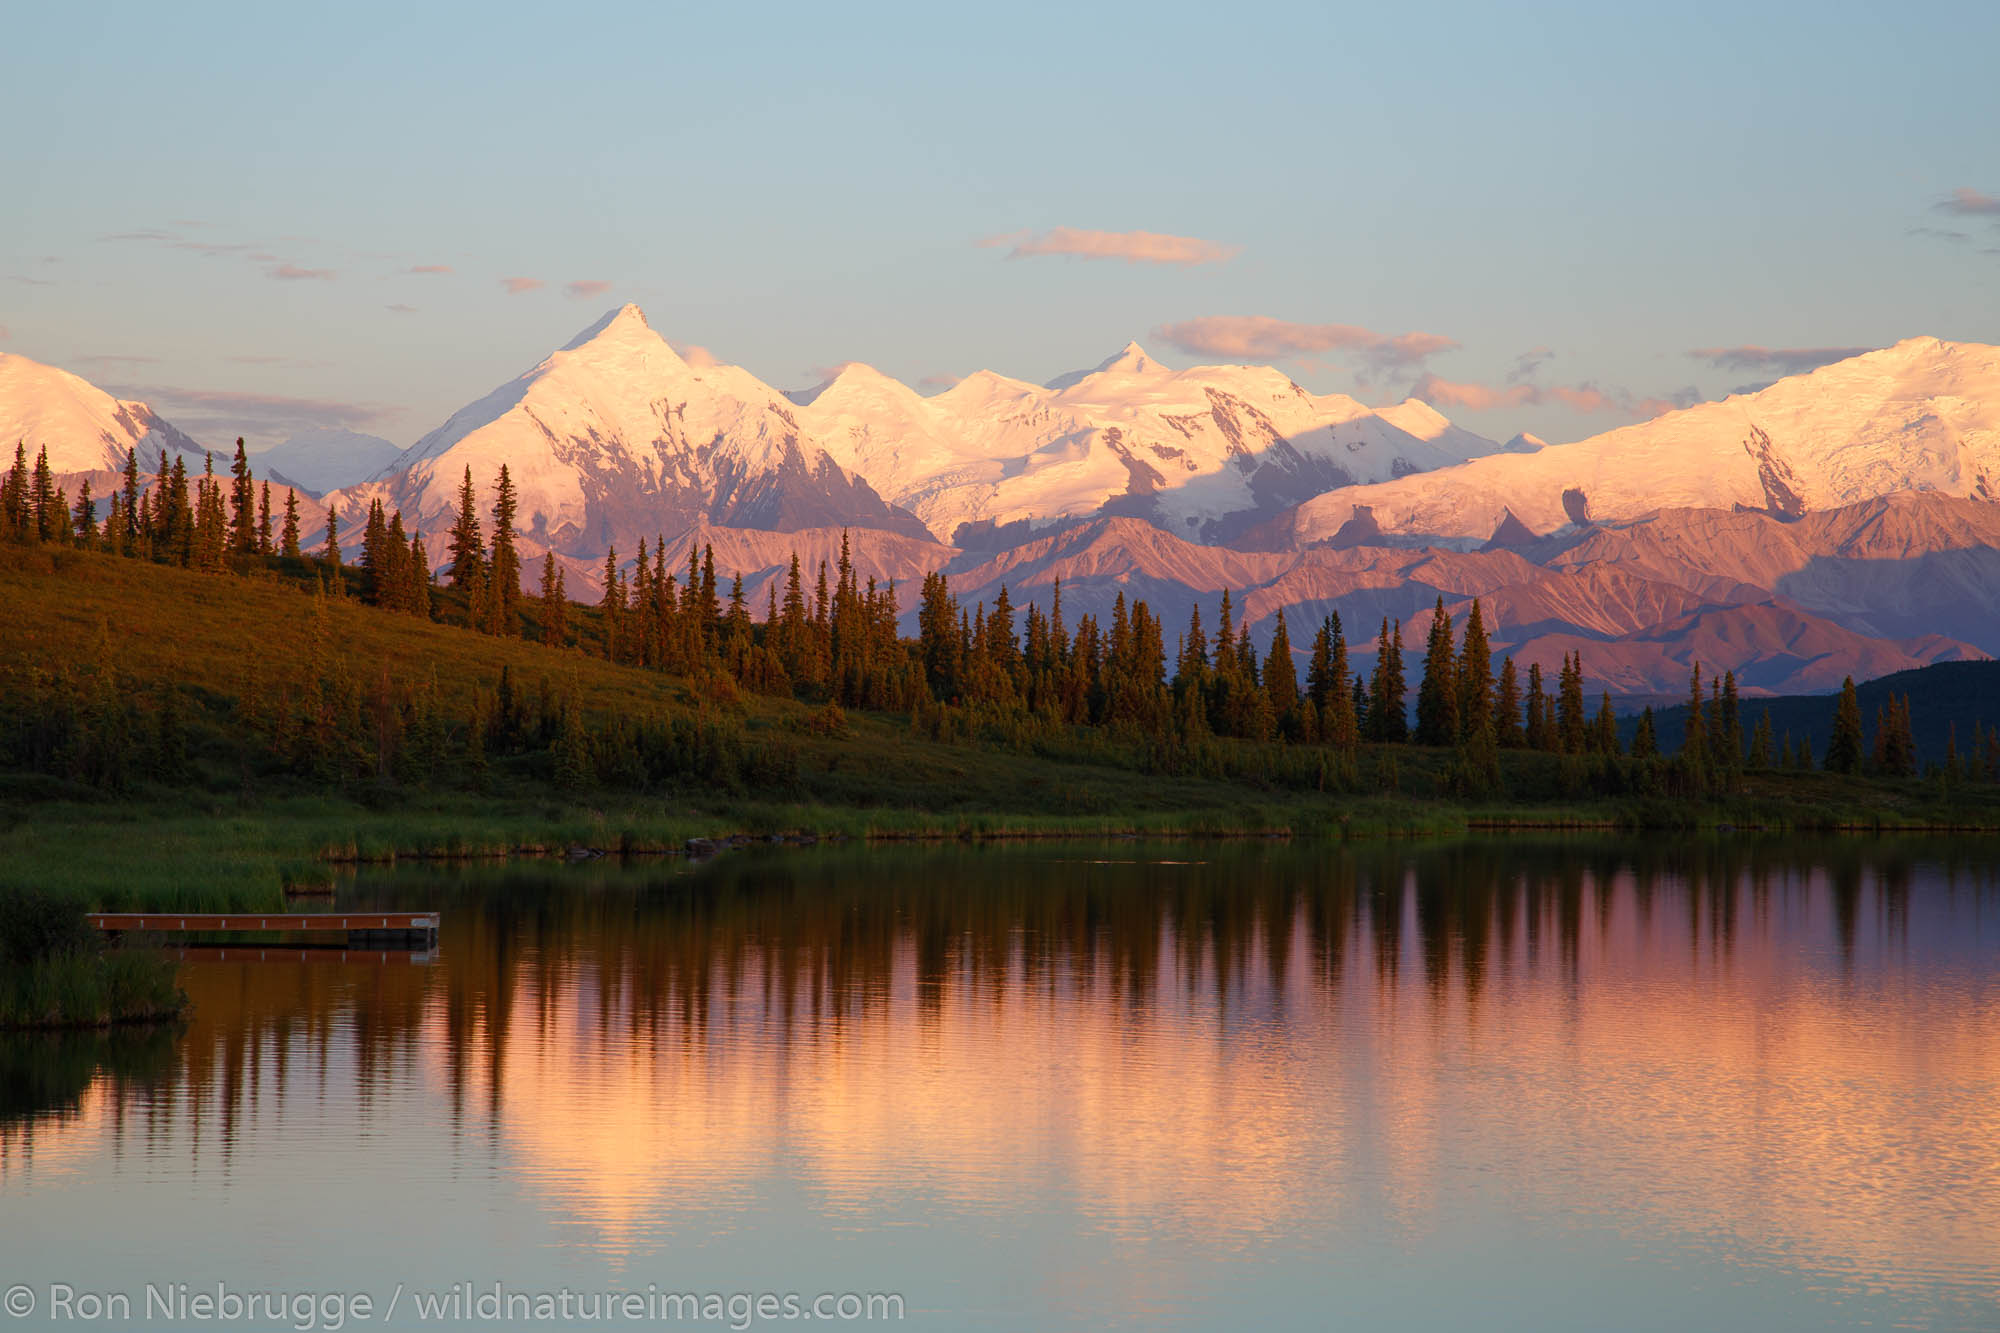 Mt. McKinley, locally known as Denali, Wonder Lake, Denali National Park, Alaska.